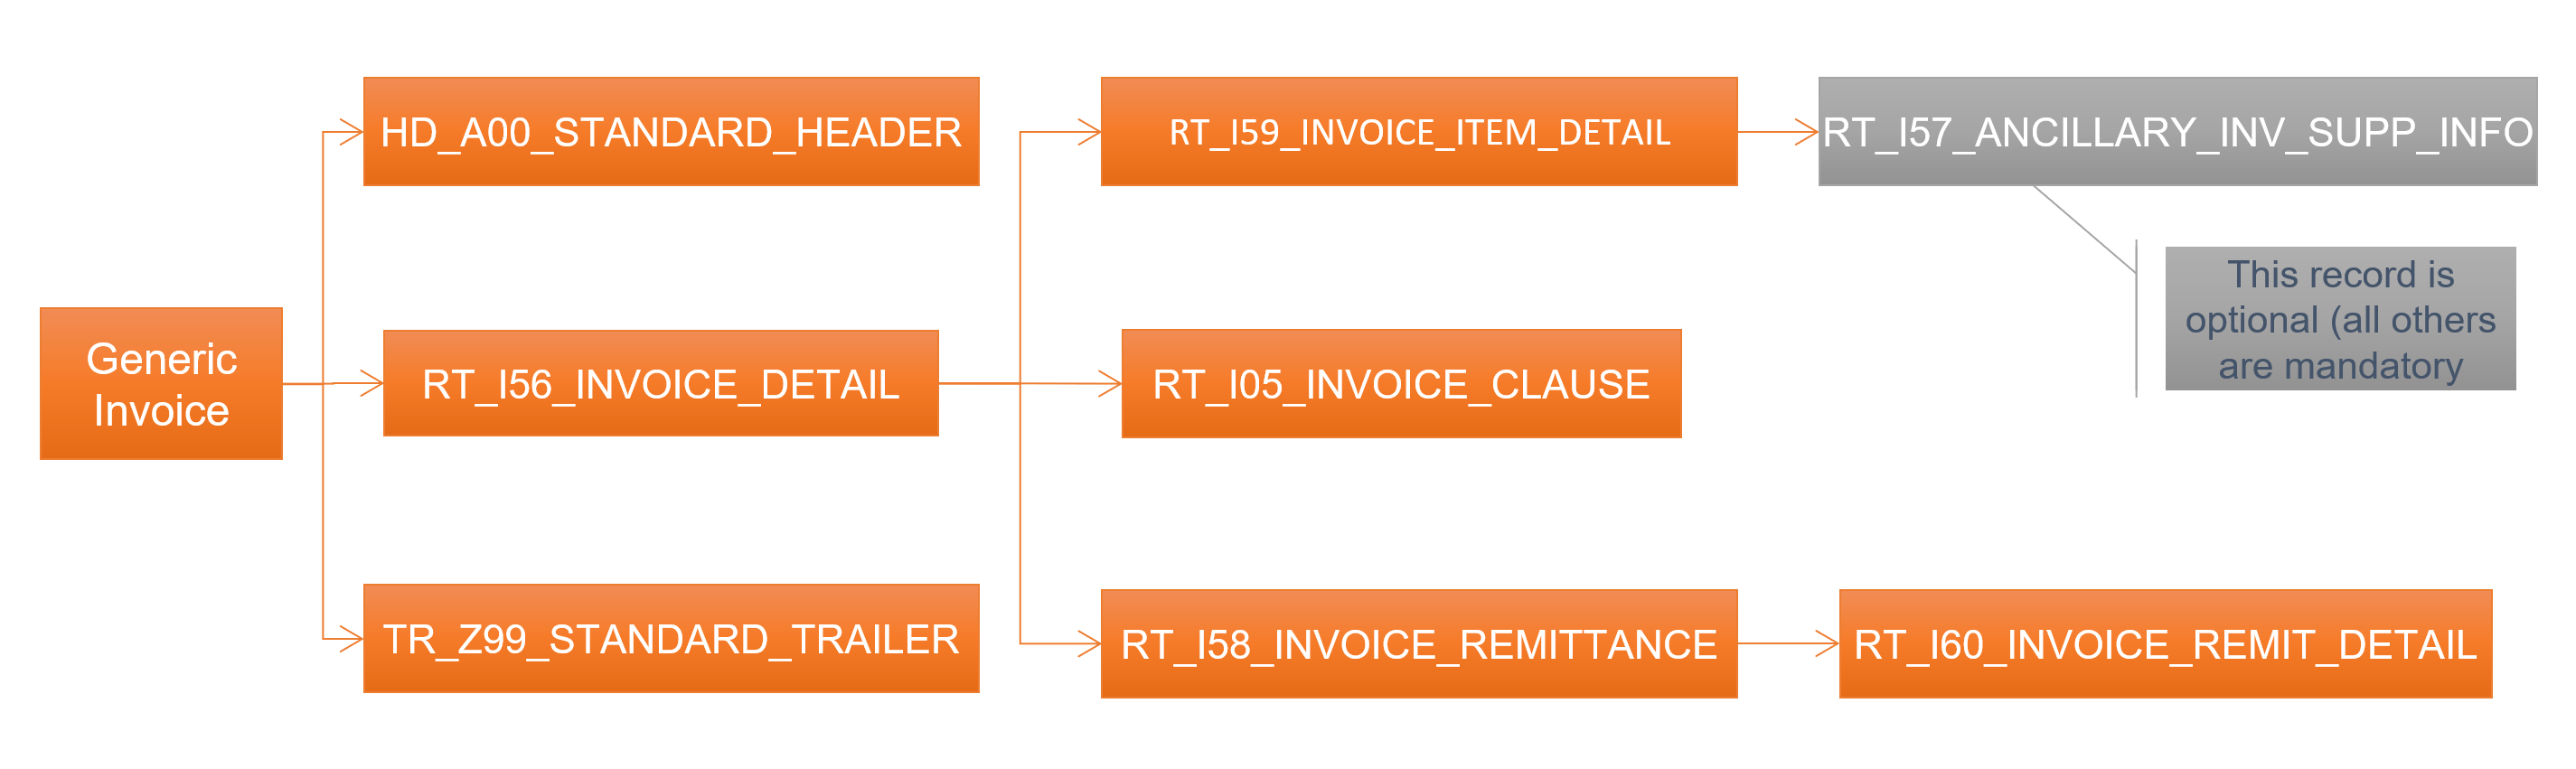 generic invoice file inv hierarchy diagram